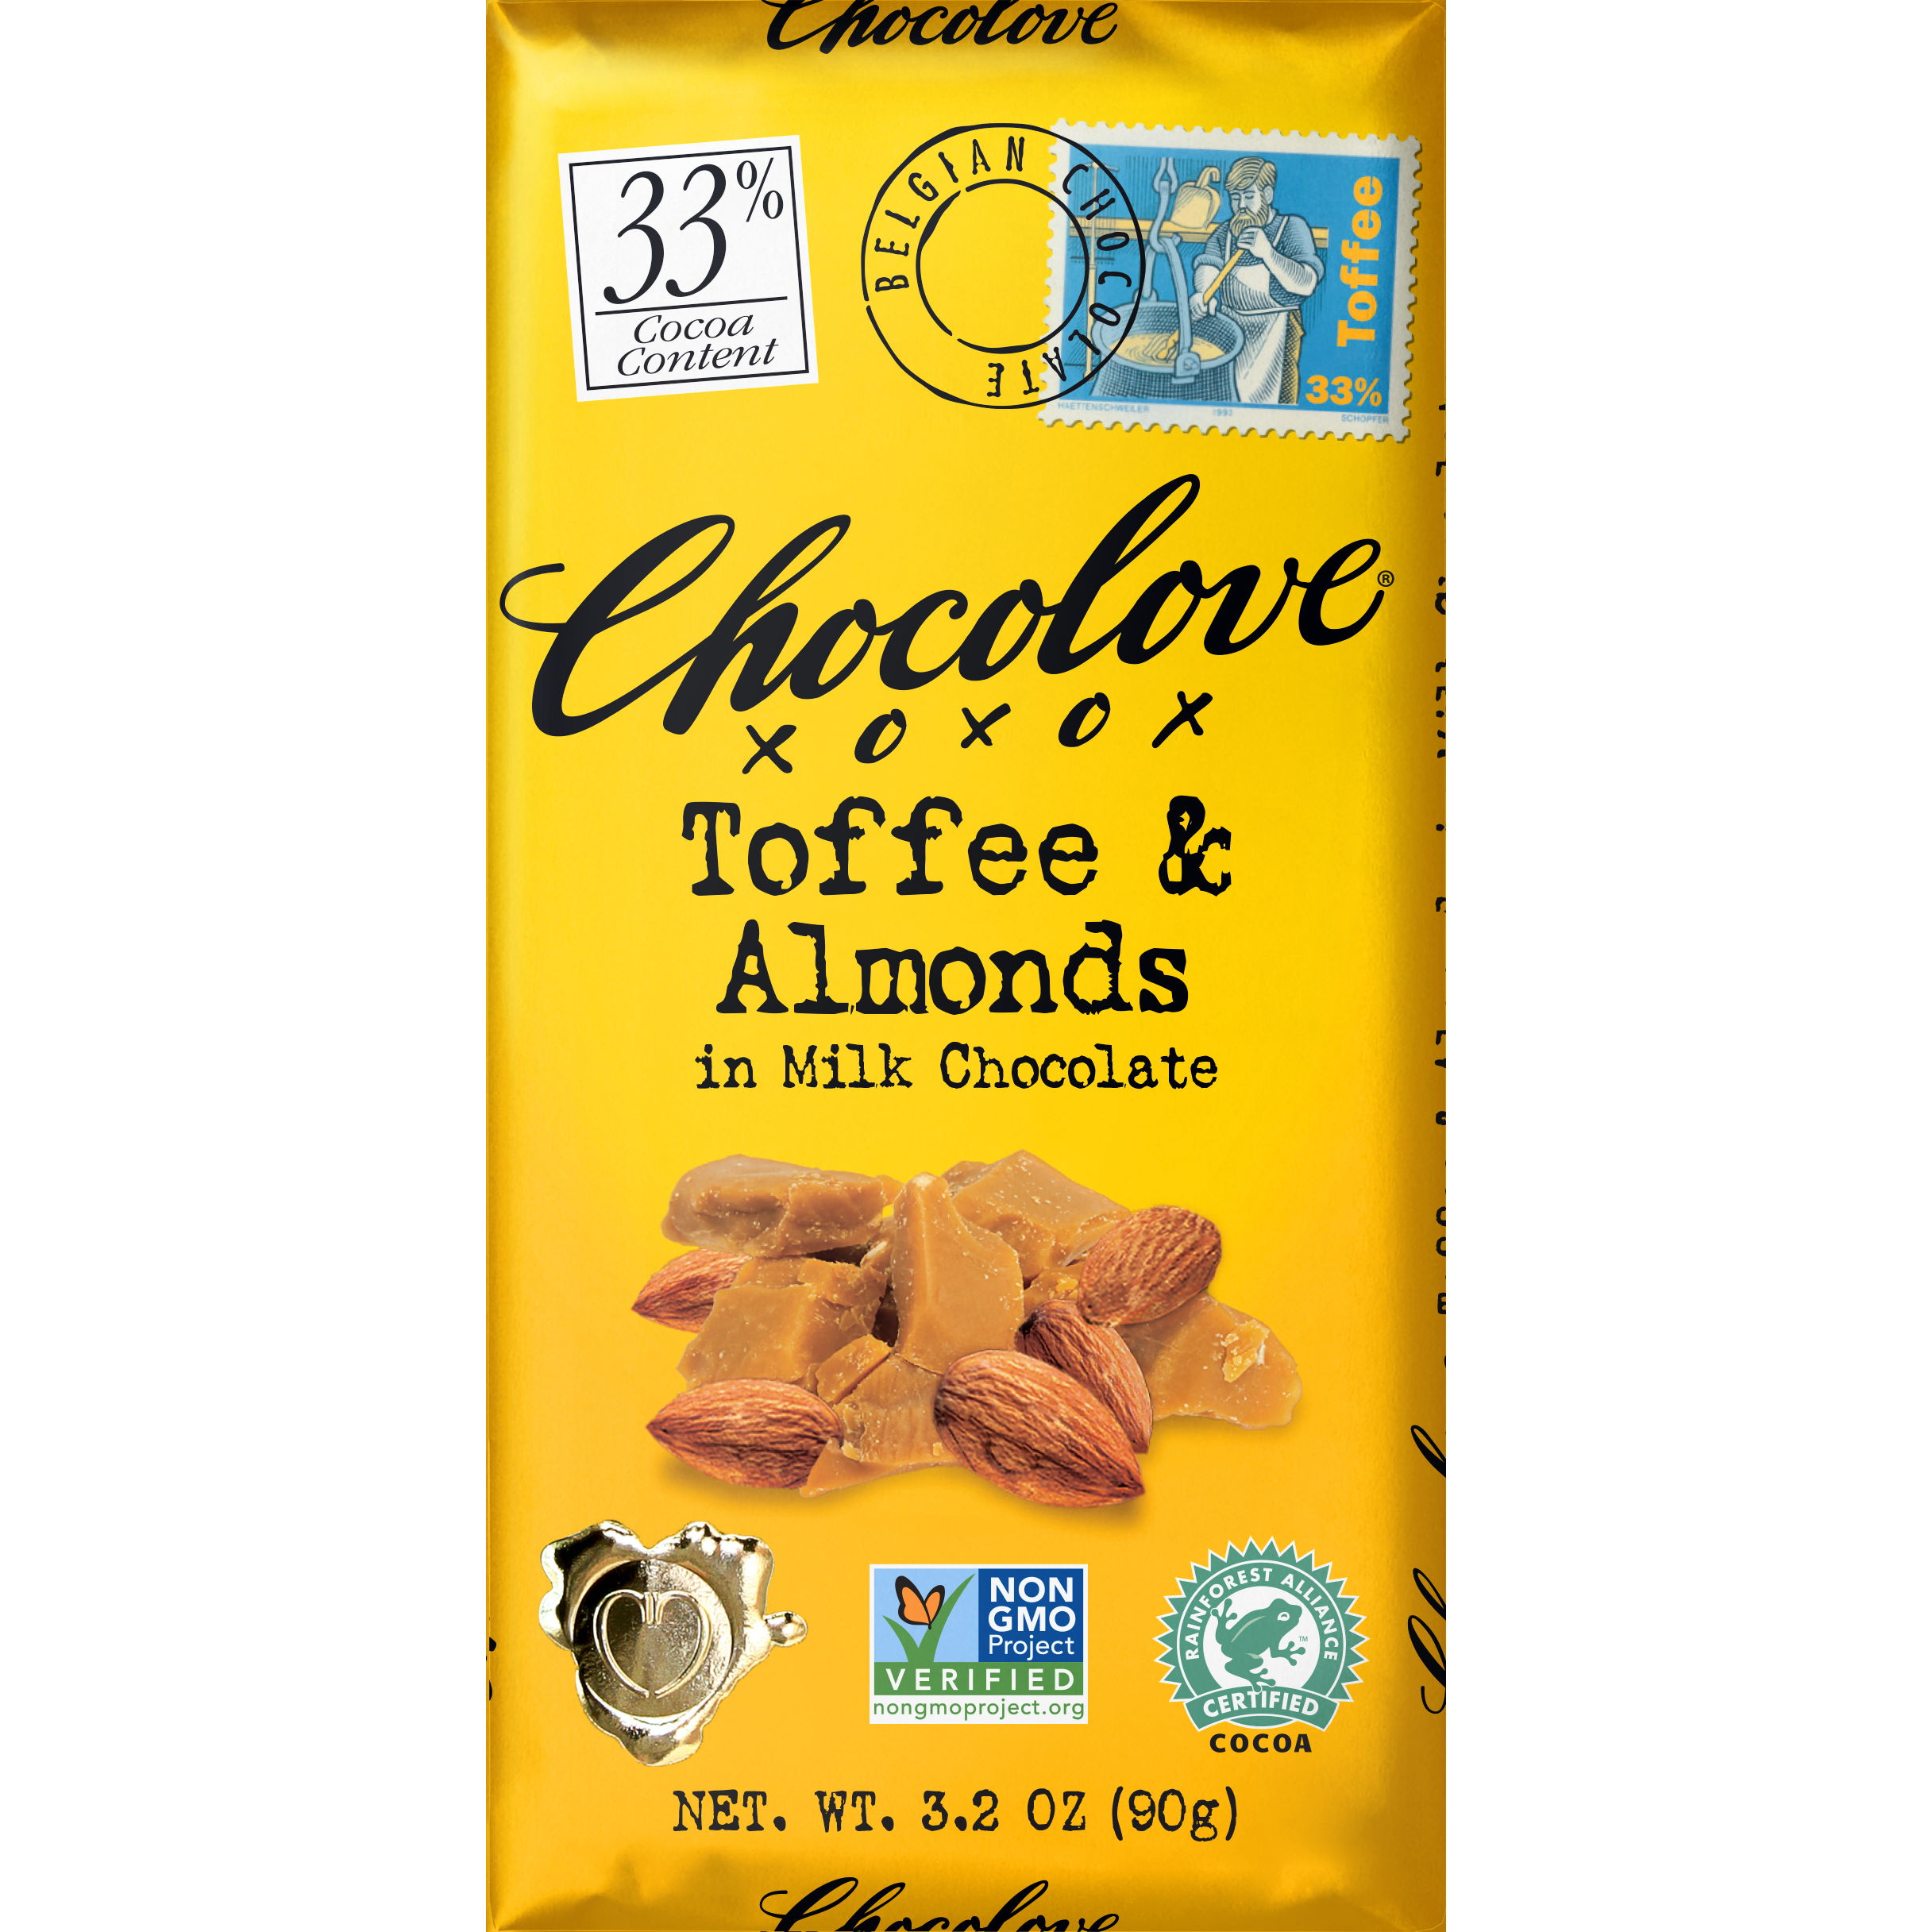 Chocolove 33% Milk Chocolate Bar with Toffee & Almonds.